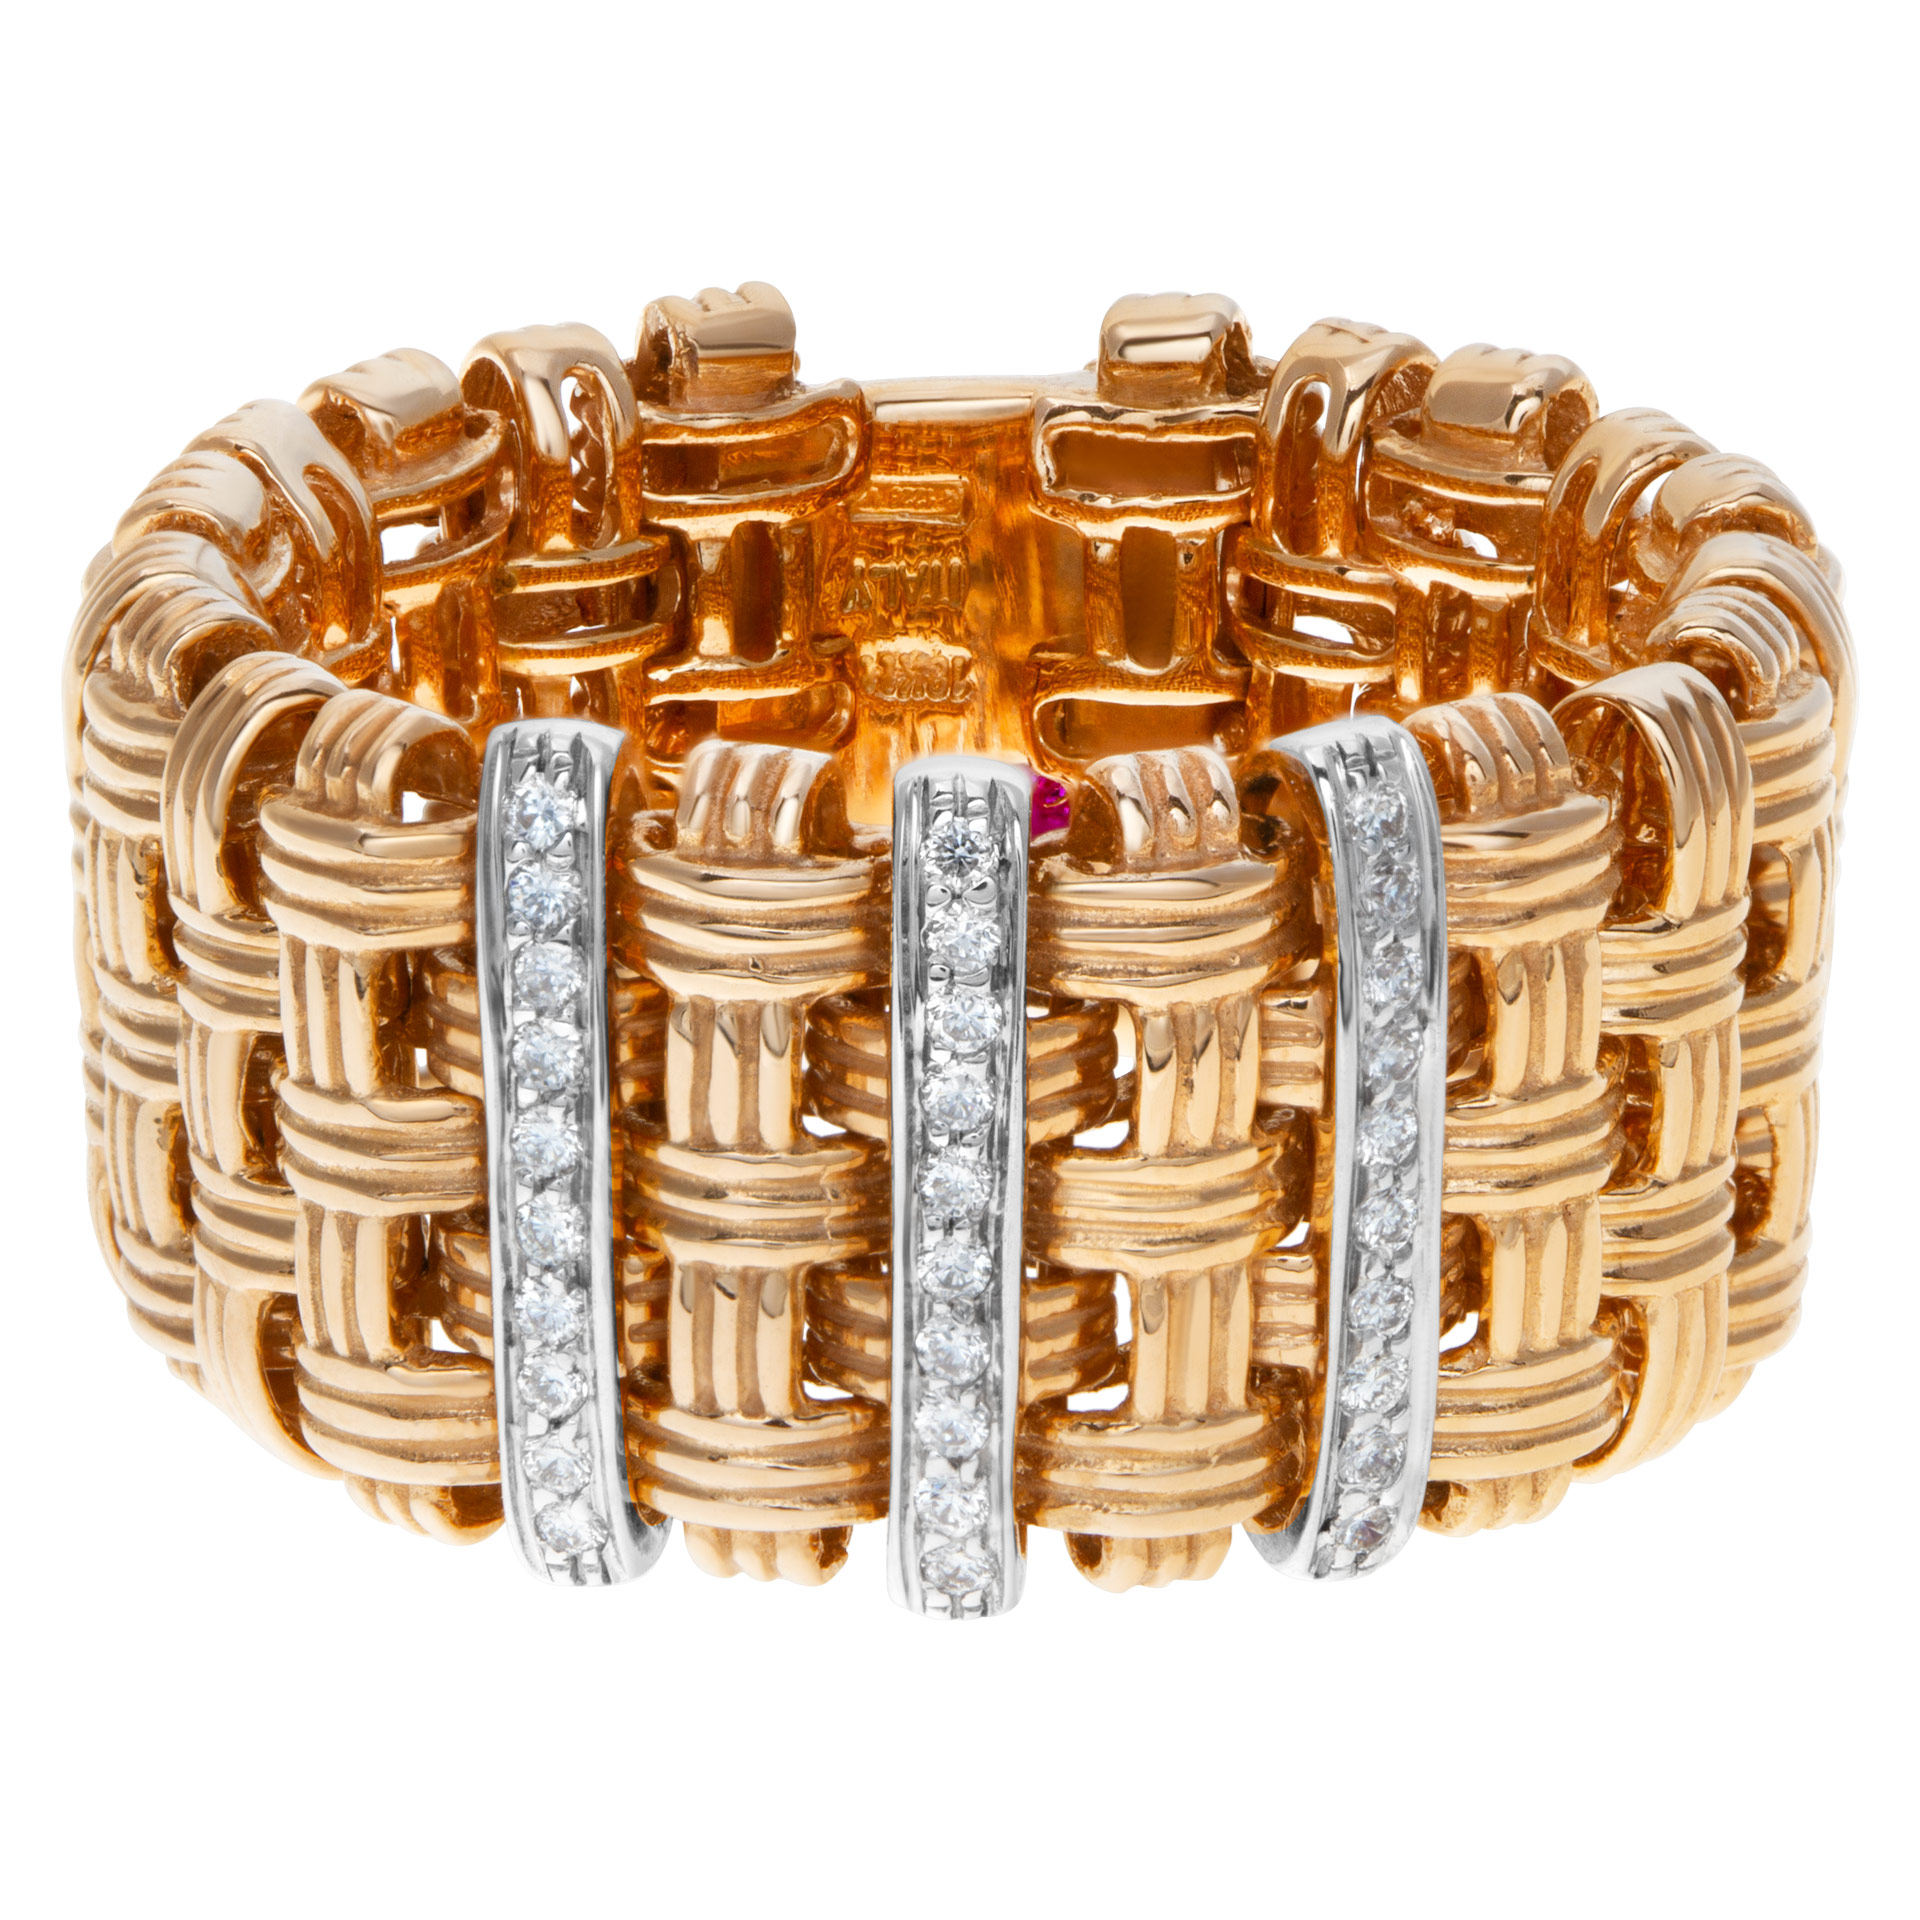 Roberto Coin "Appassionata" 18K Rose and White Gold Diamond Woven Band Ring